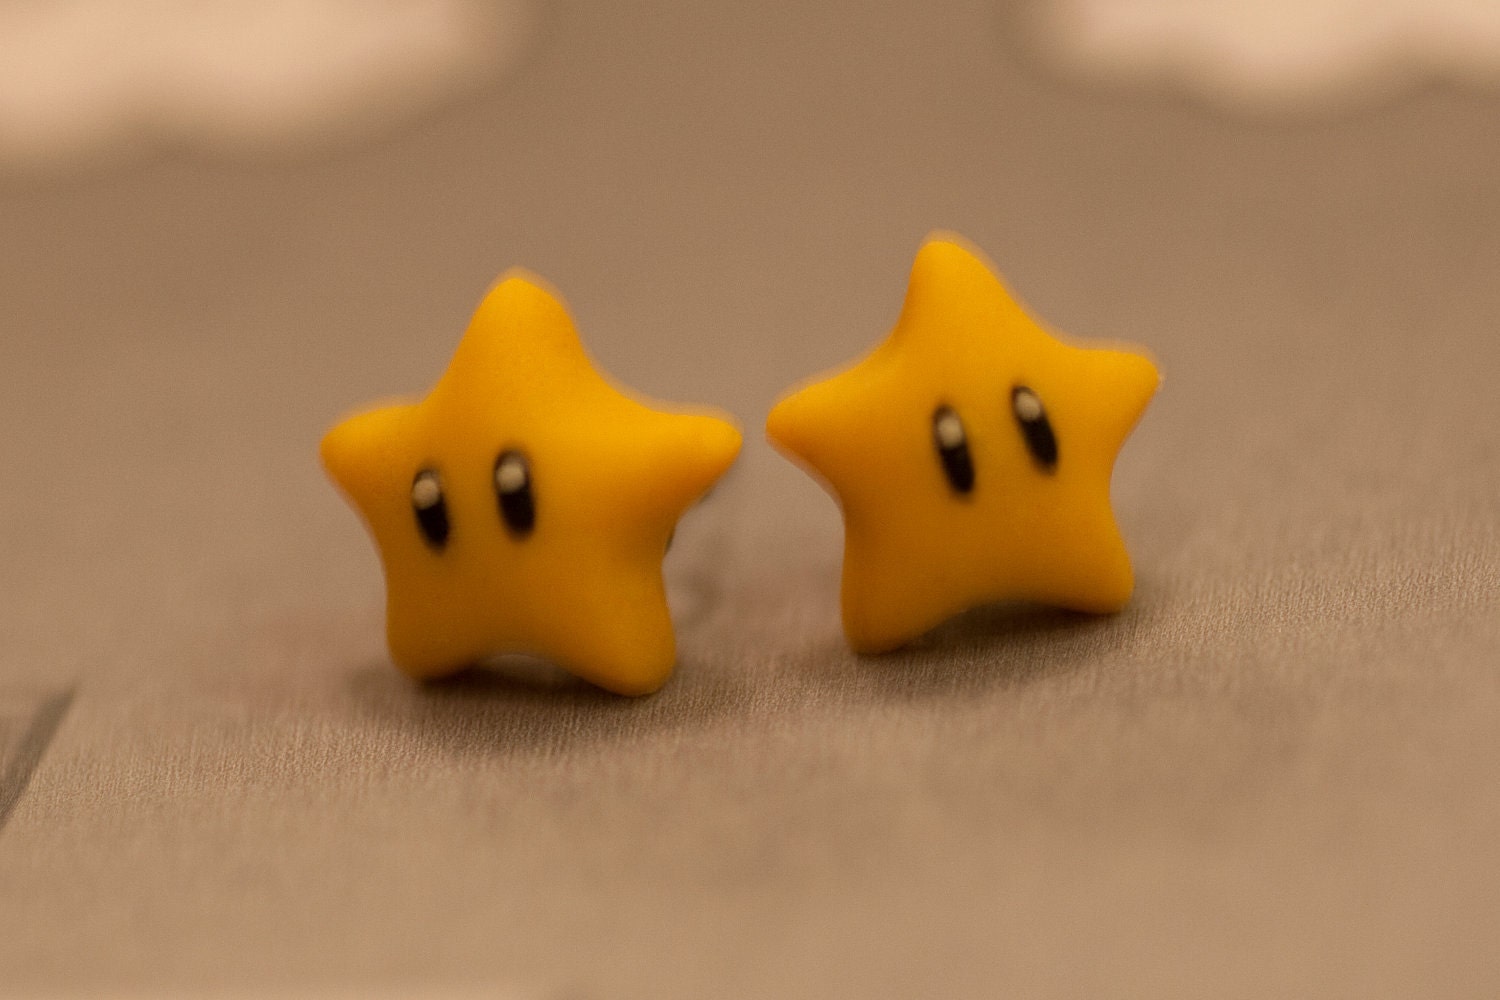 Nintendo Mario Star Earrings